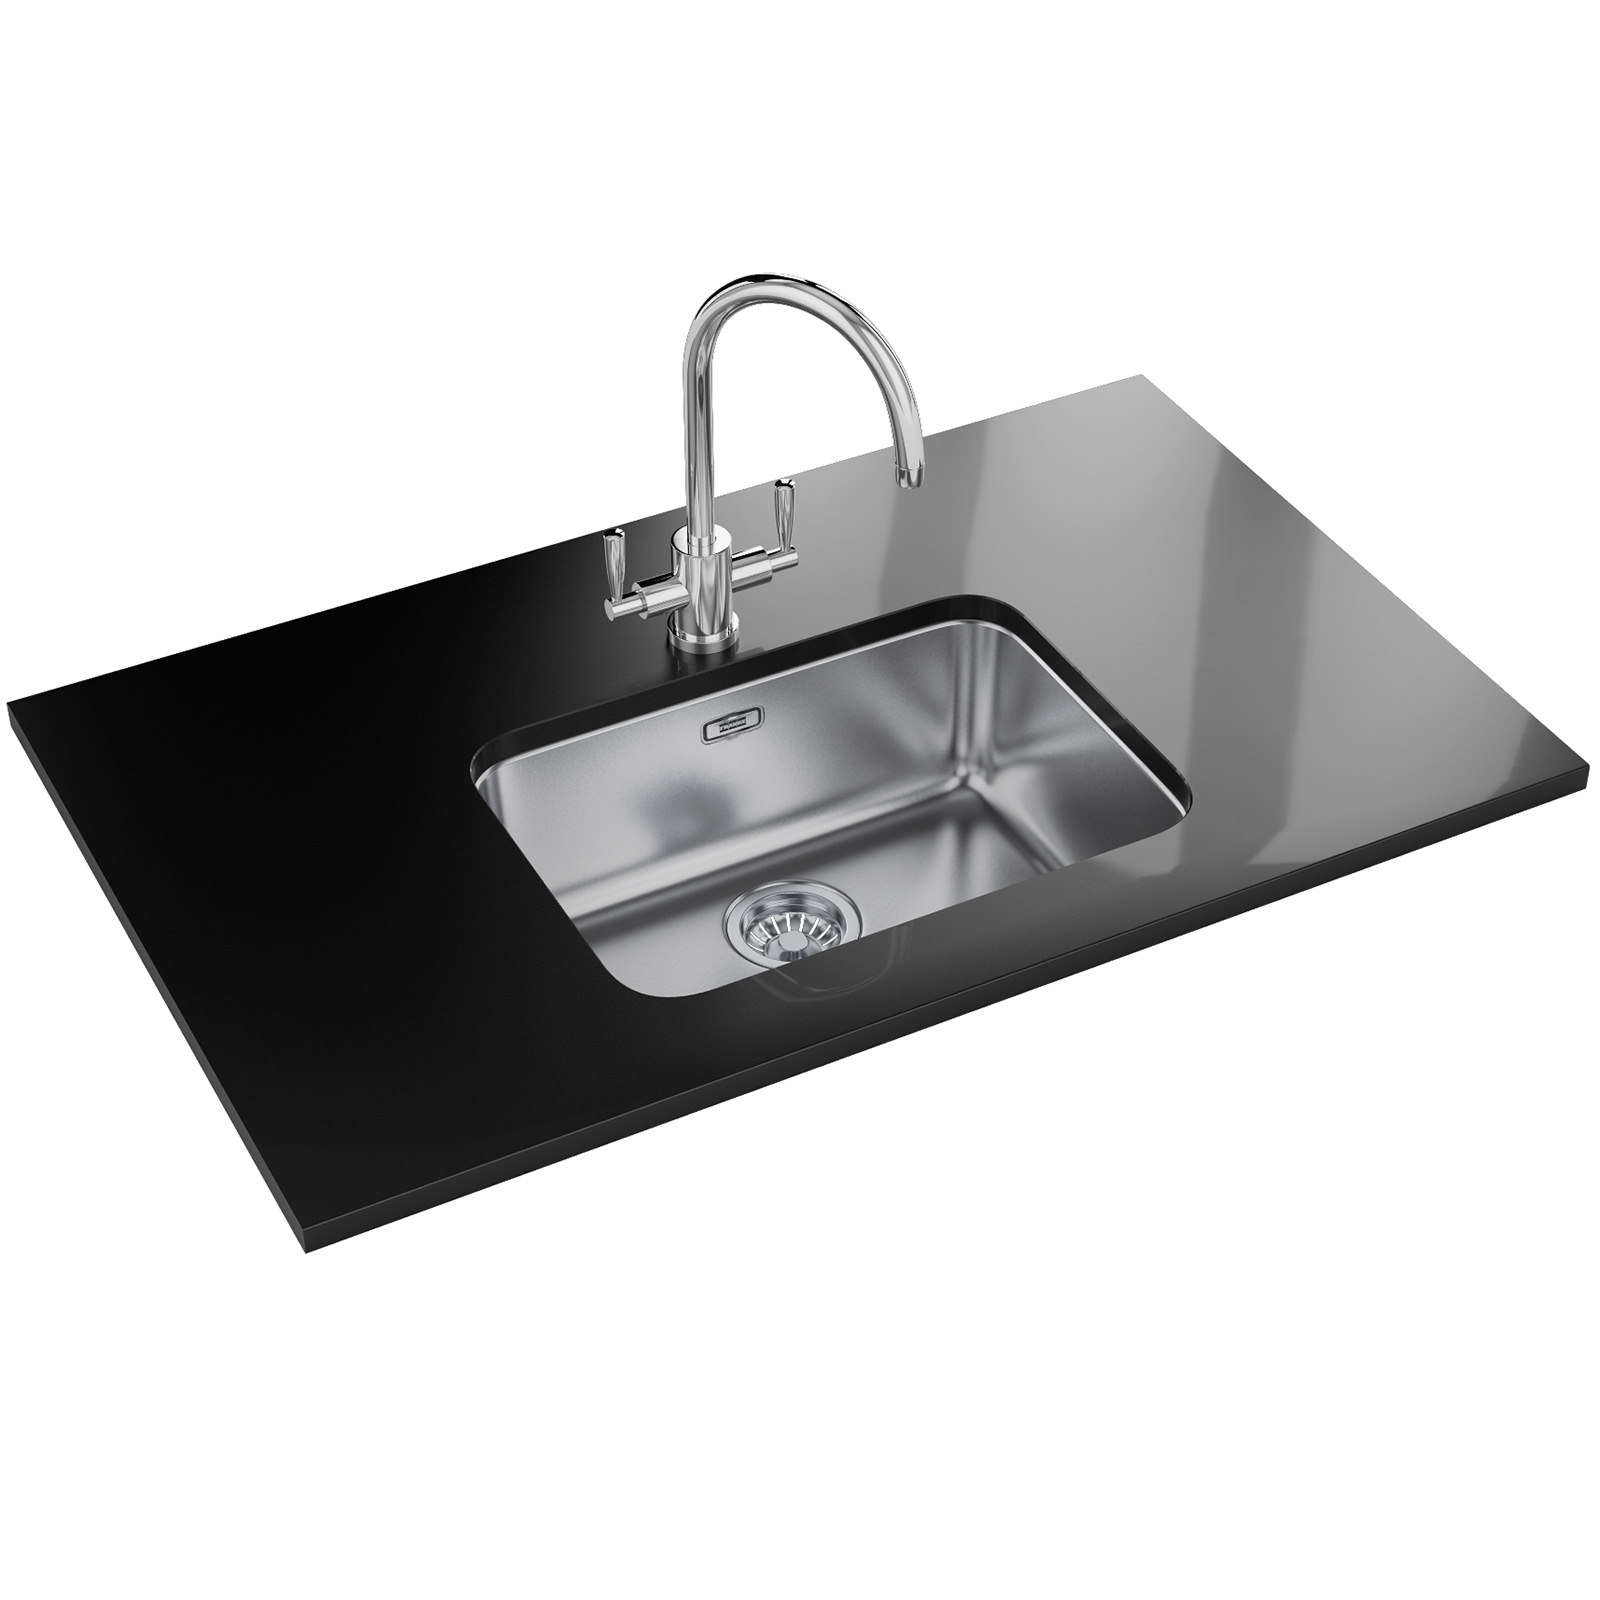 Franke Largo LAX 110 50 Stainless Steel Undermount Kitchen Sink Franke Stainless Steel Undermount Sink